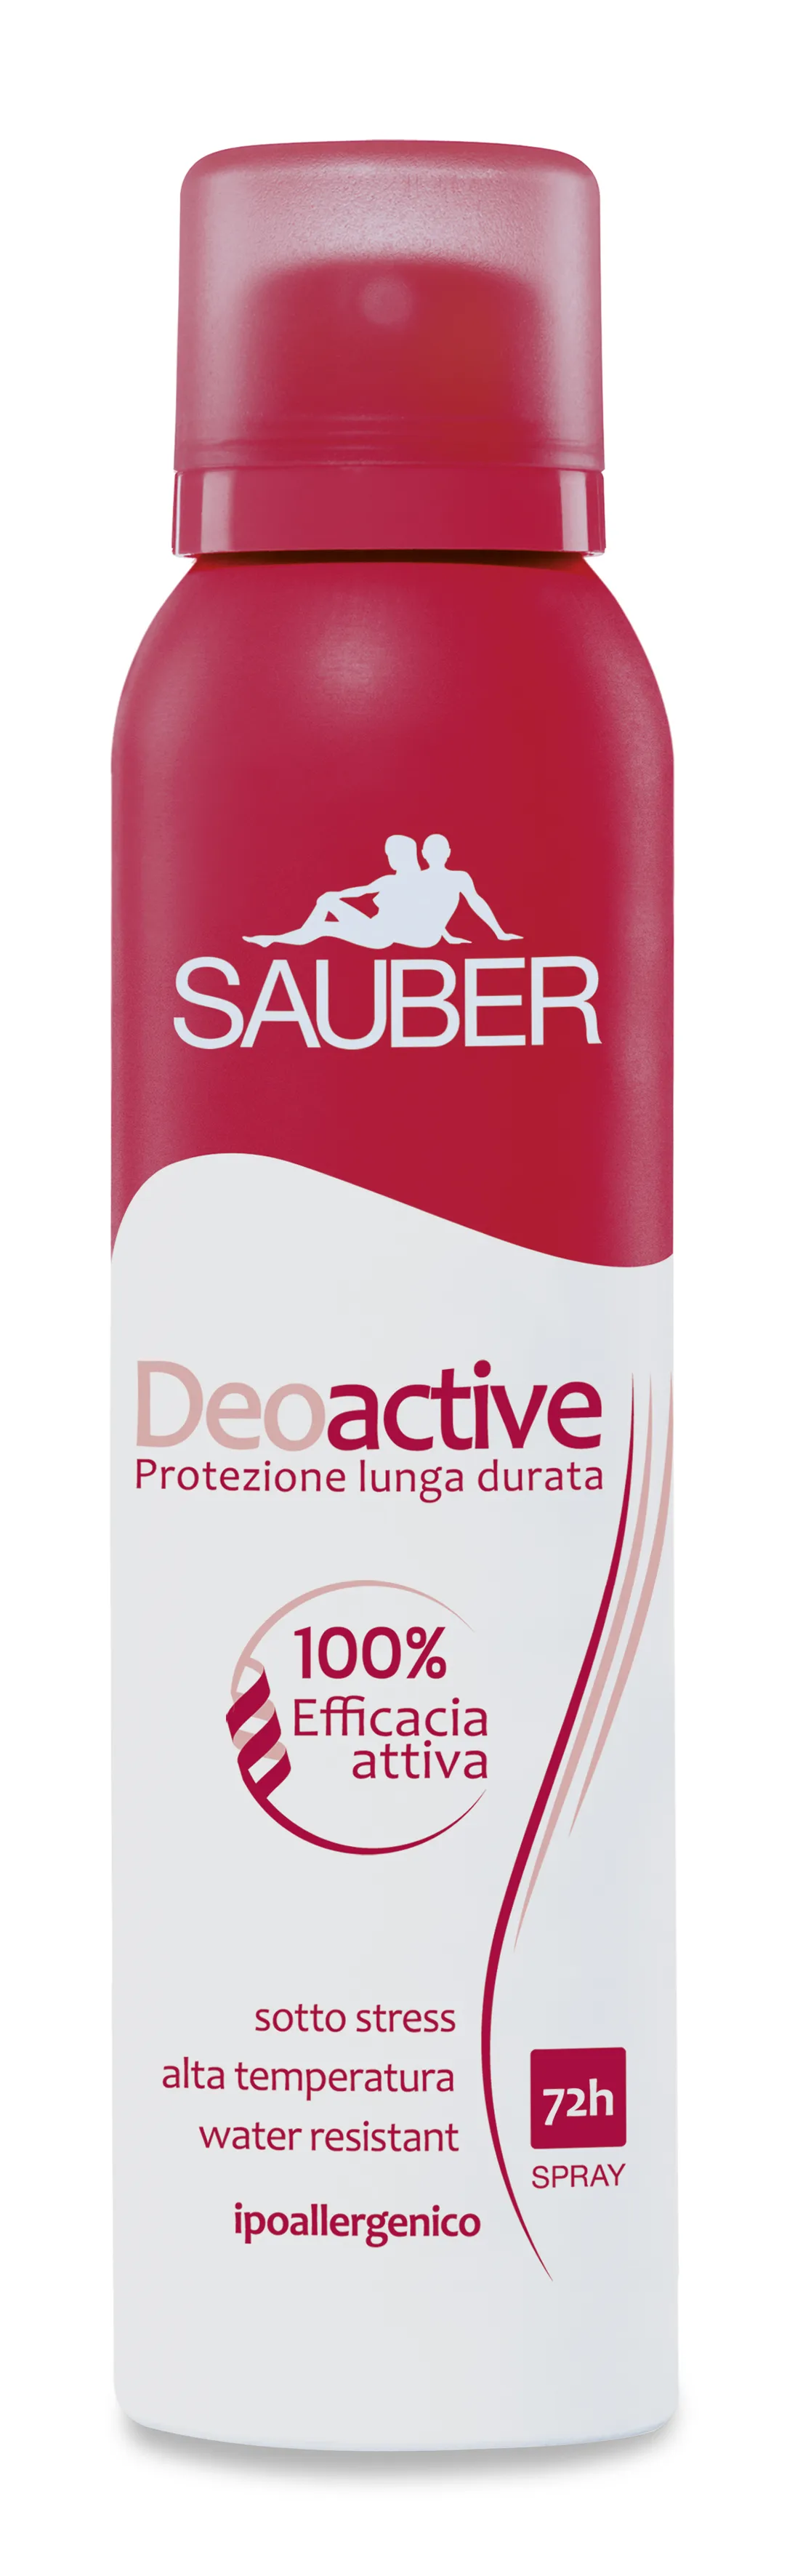 "SAUBER Deodorante Spray Deoactive Lunga Durata 150 ml"